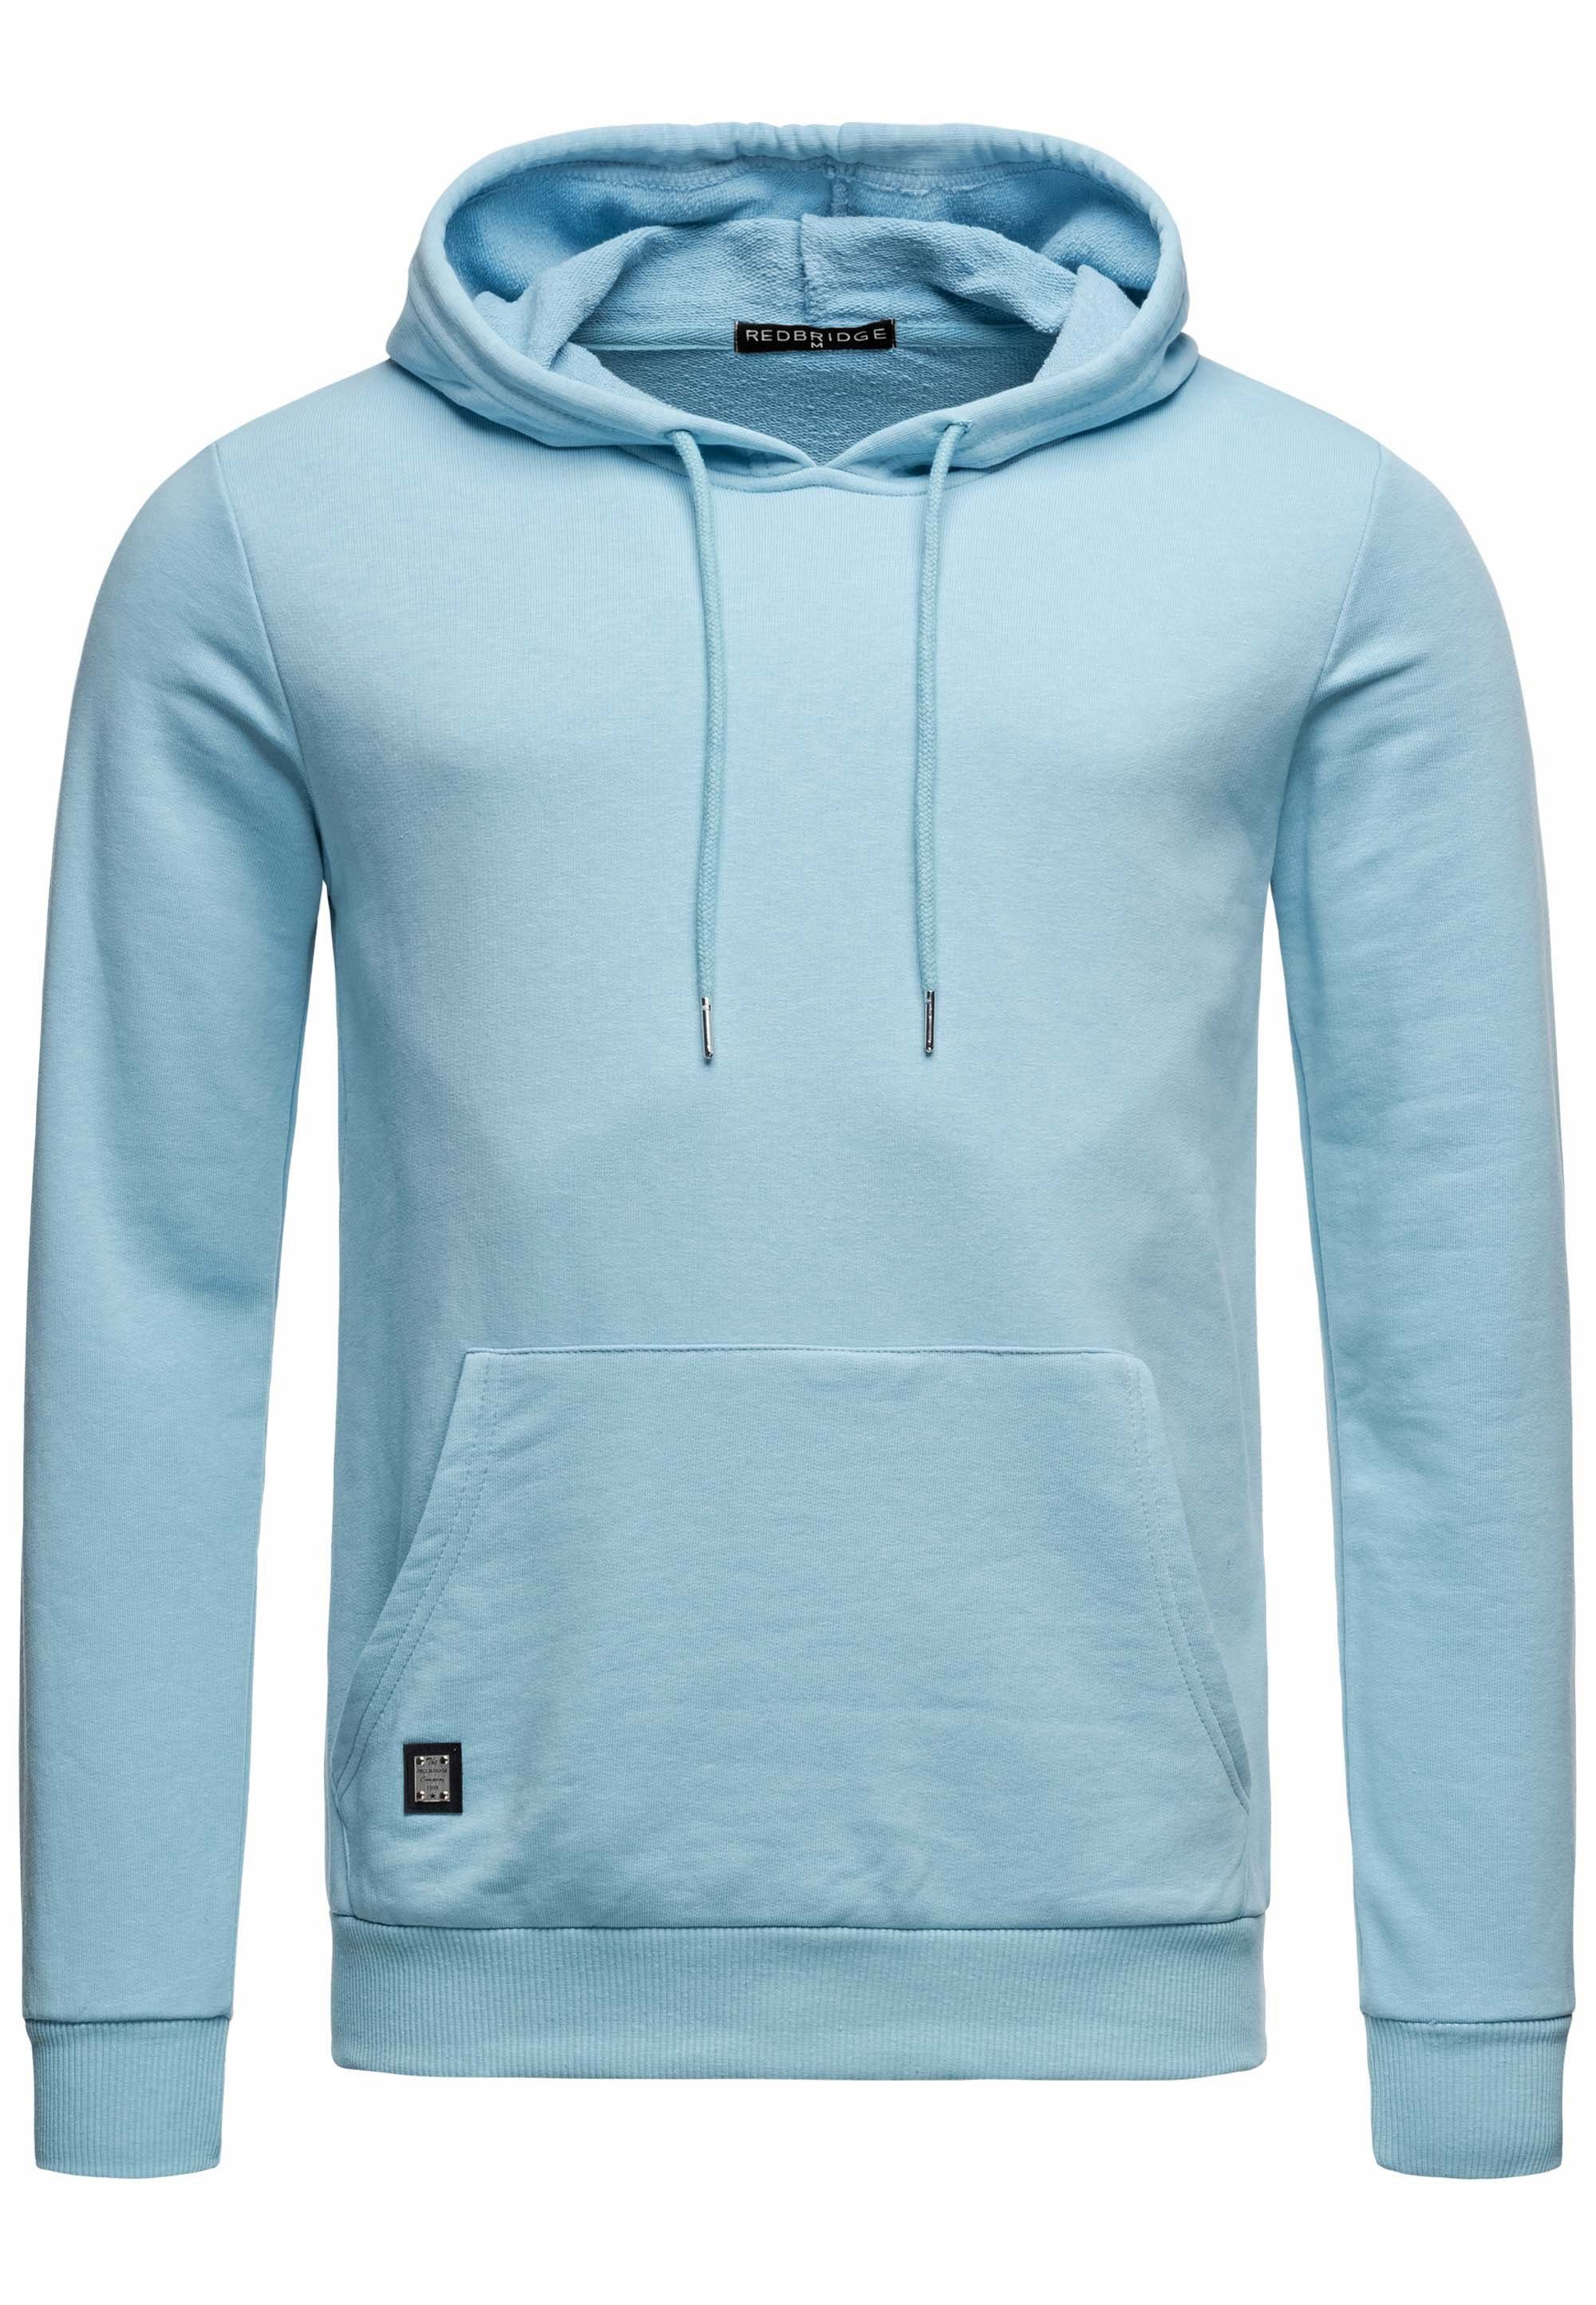 RedBridge Kapuzensweatshirt Hoodie mit Kängurutasche Premium Qualität Blau